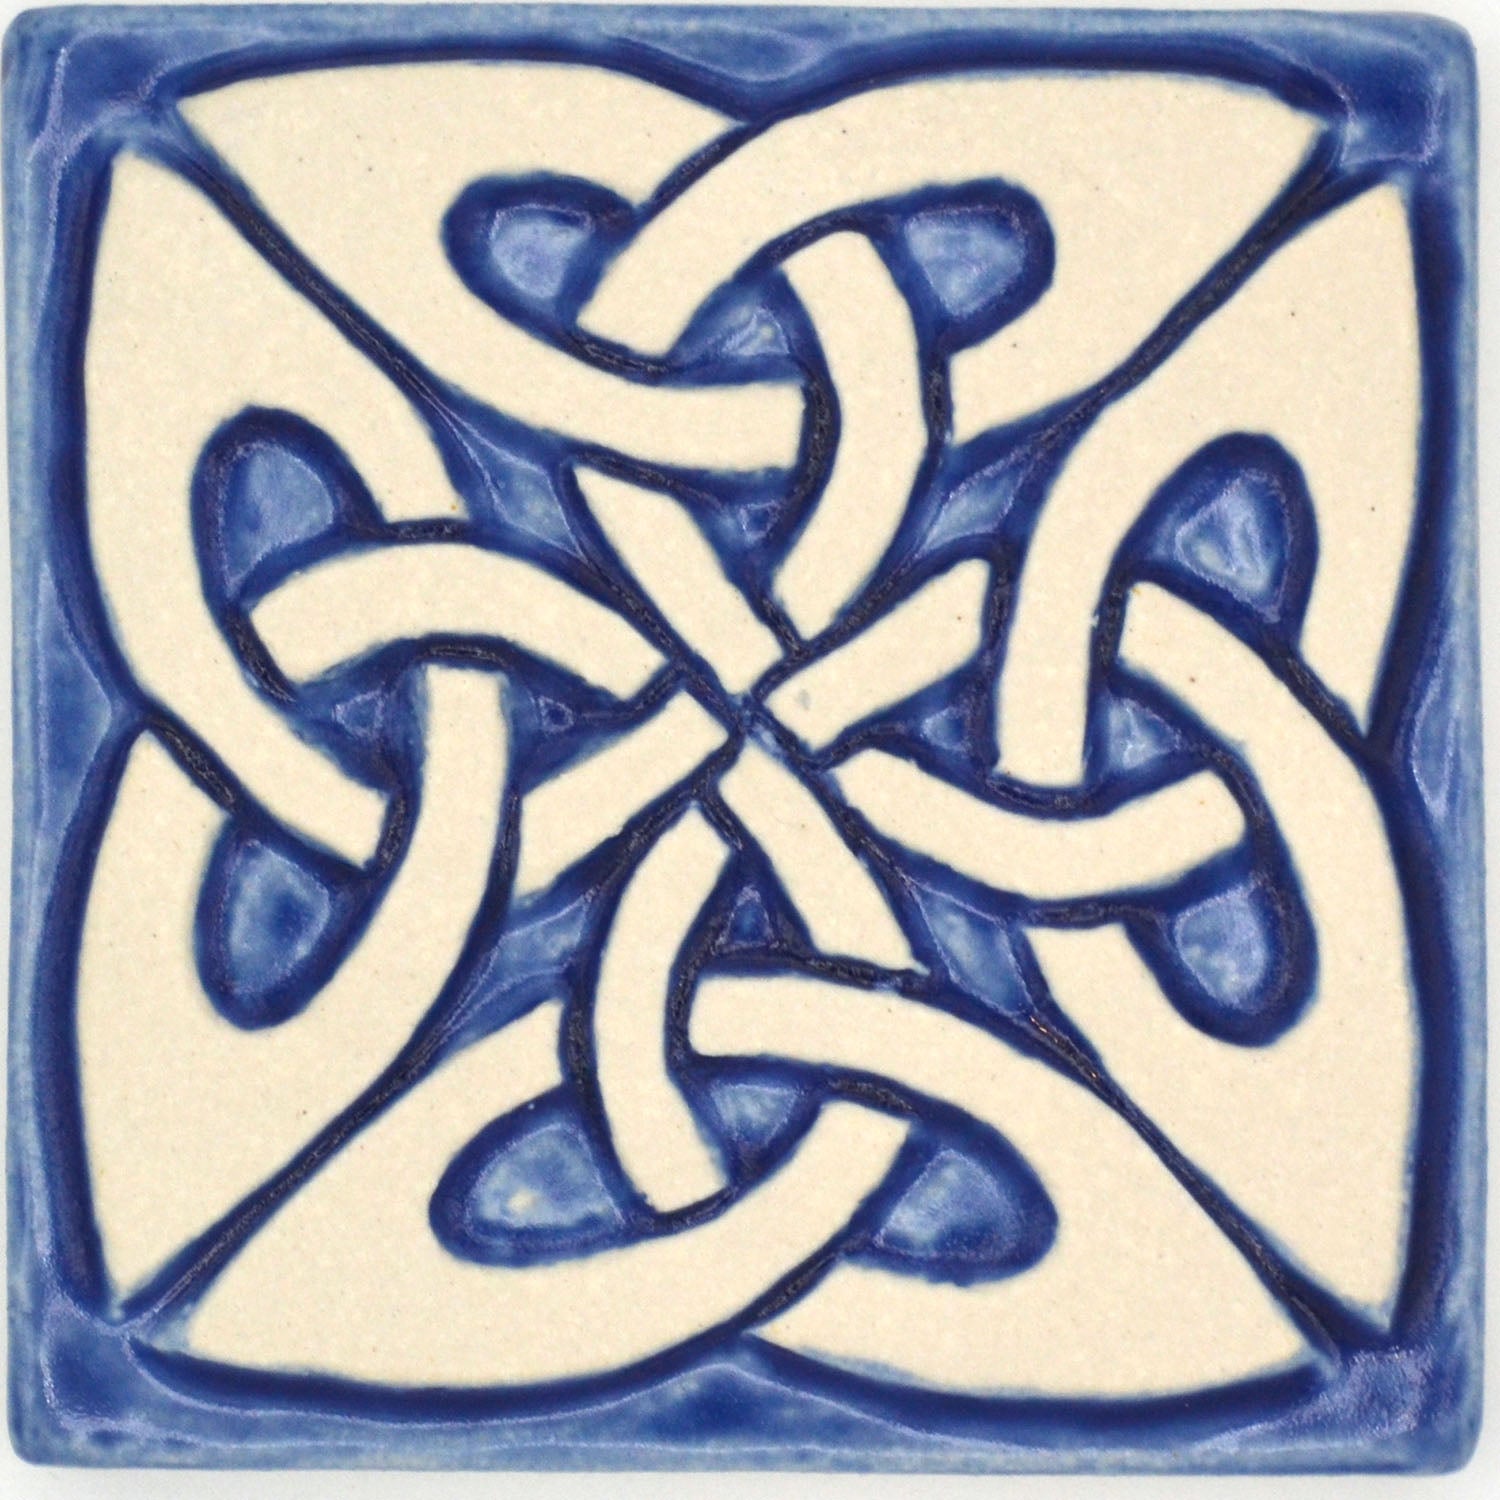 4x4 blue celtic square knot tile